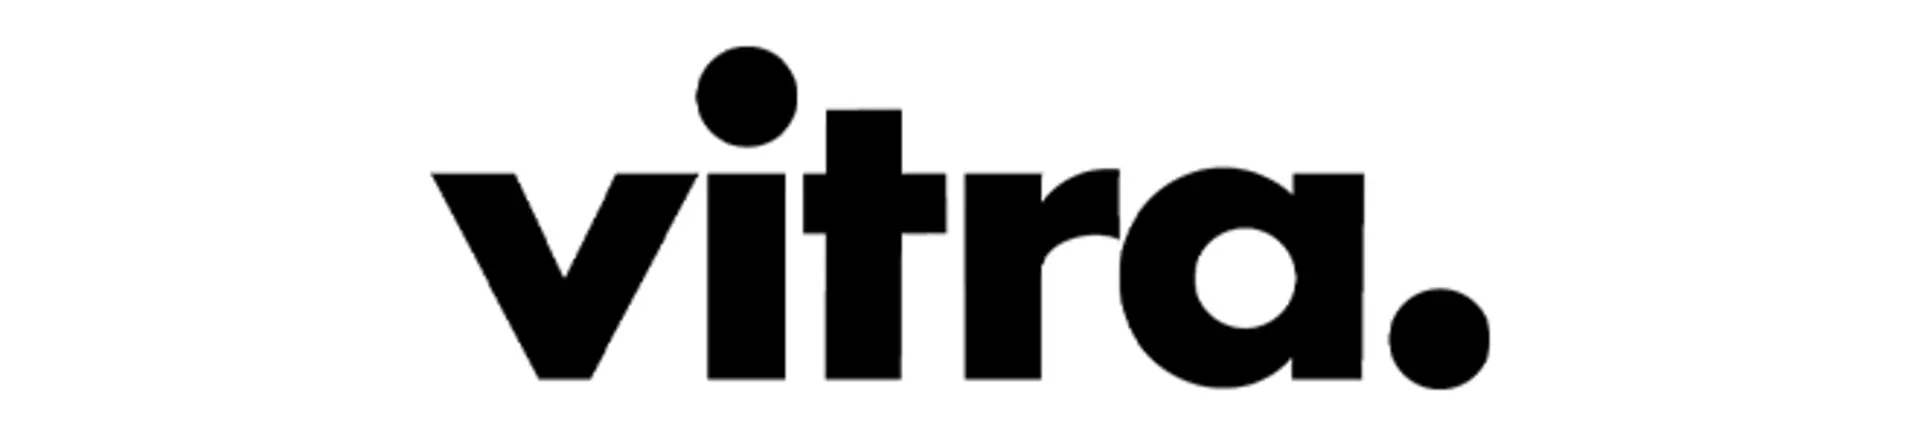 Logo der Designer Marke Vitra